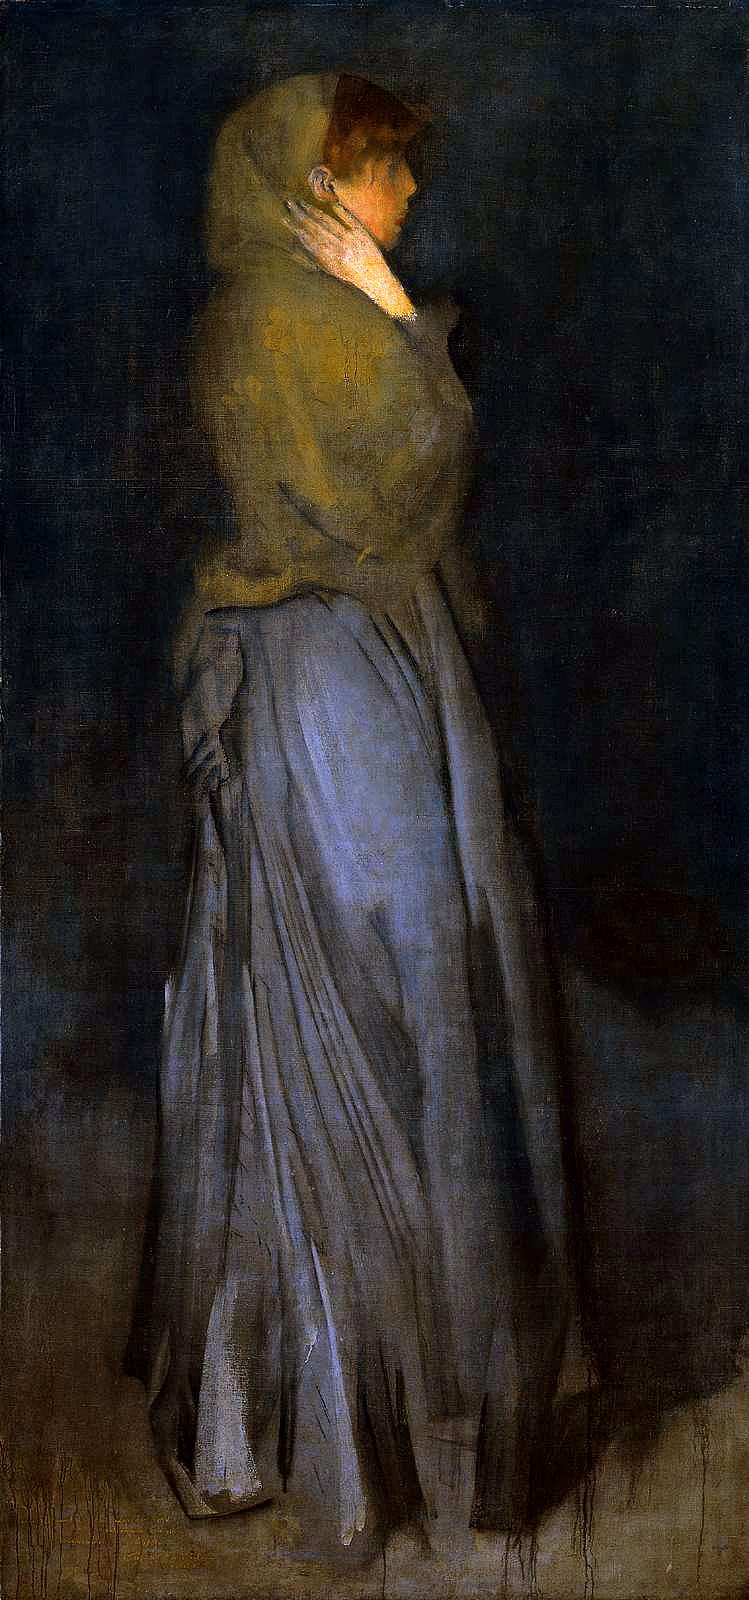 黄色和灰色排列 Arrangement in Yellow and Grey (1857 - 1858)，詹姆斯·阿博特·麦克尼尔·惠斯勒